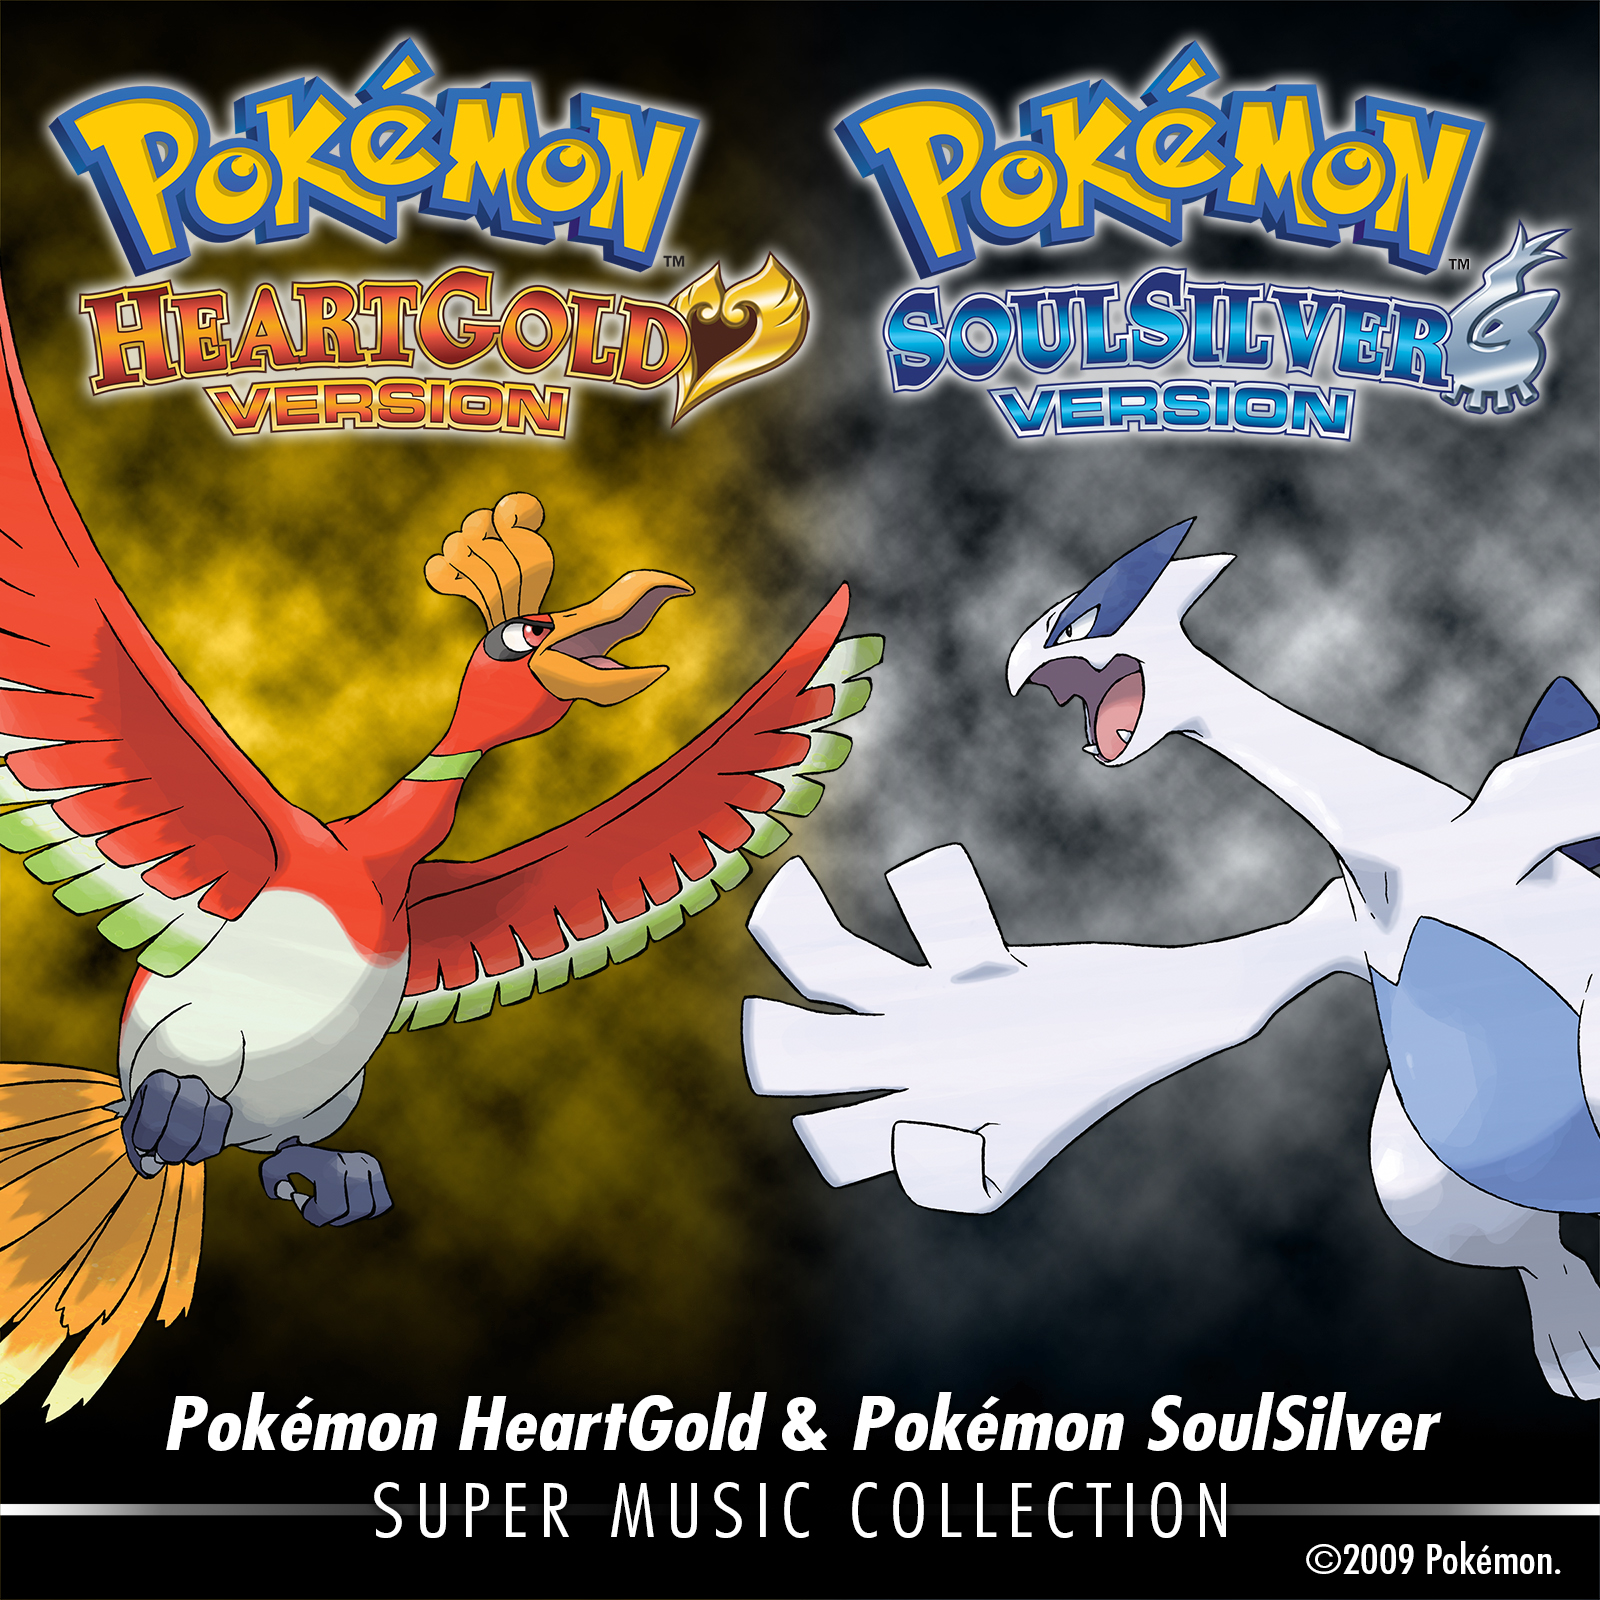 Pokémon HeartGold/SoulSilver Randomizer PT-BR DOWNLOAD Drastic